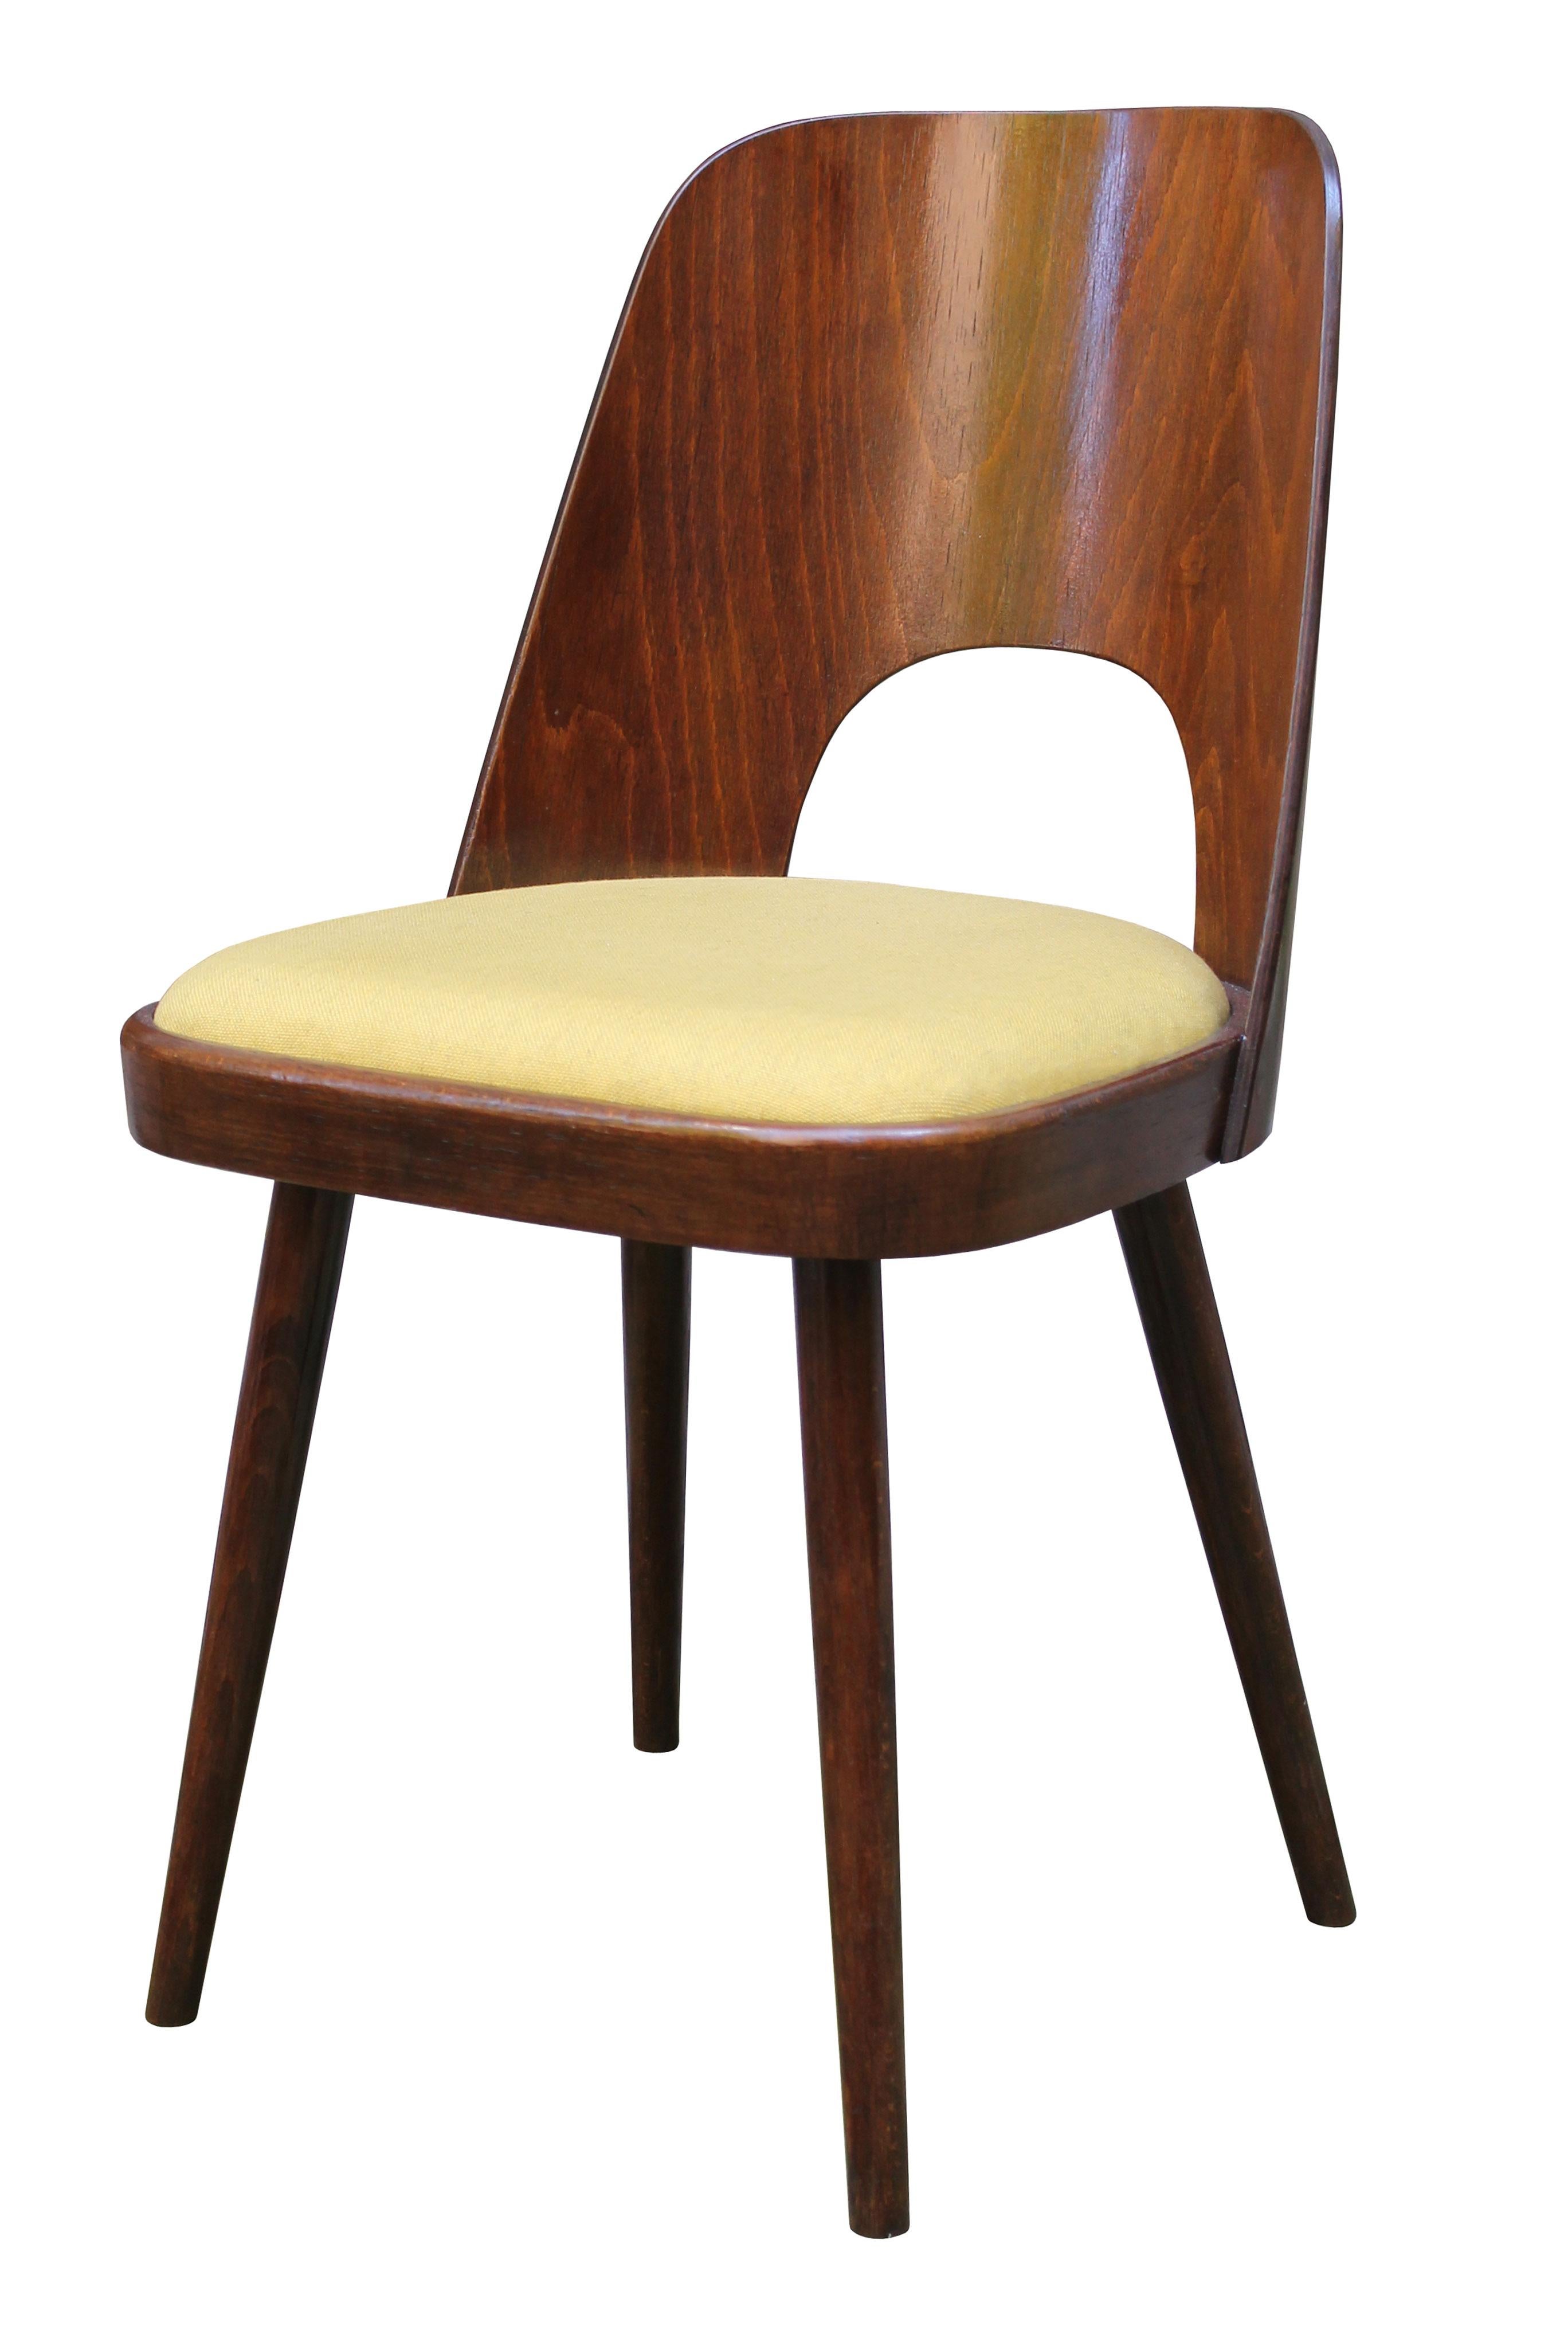 Mid-Century Modern Mid Century Dining chair n.515 by Oswald Haerdtl for TON Company